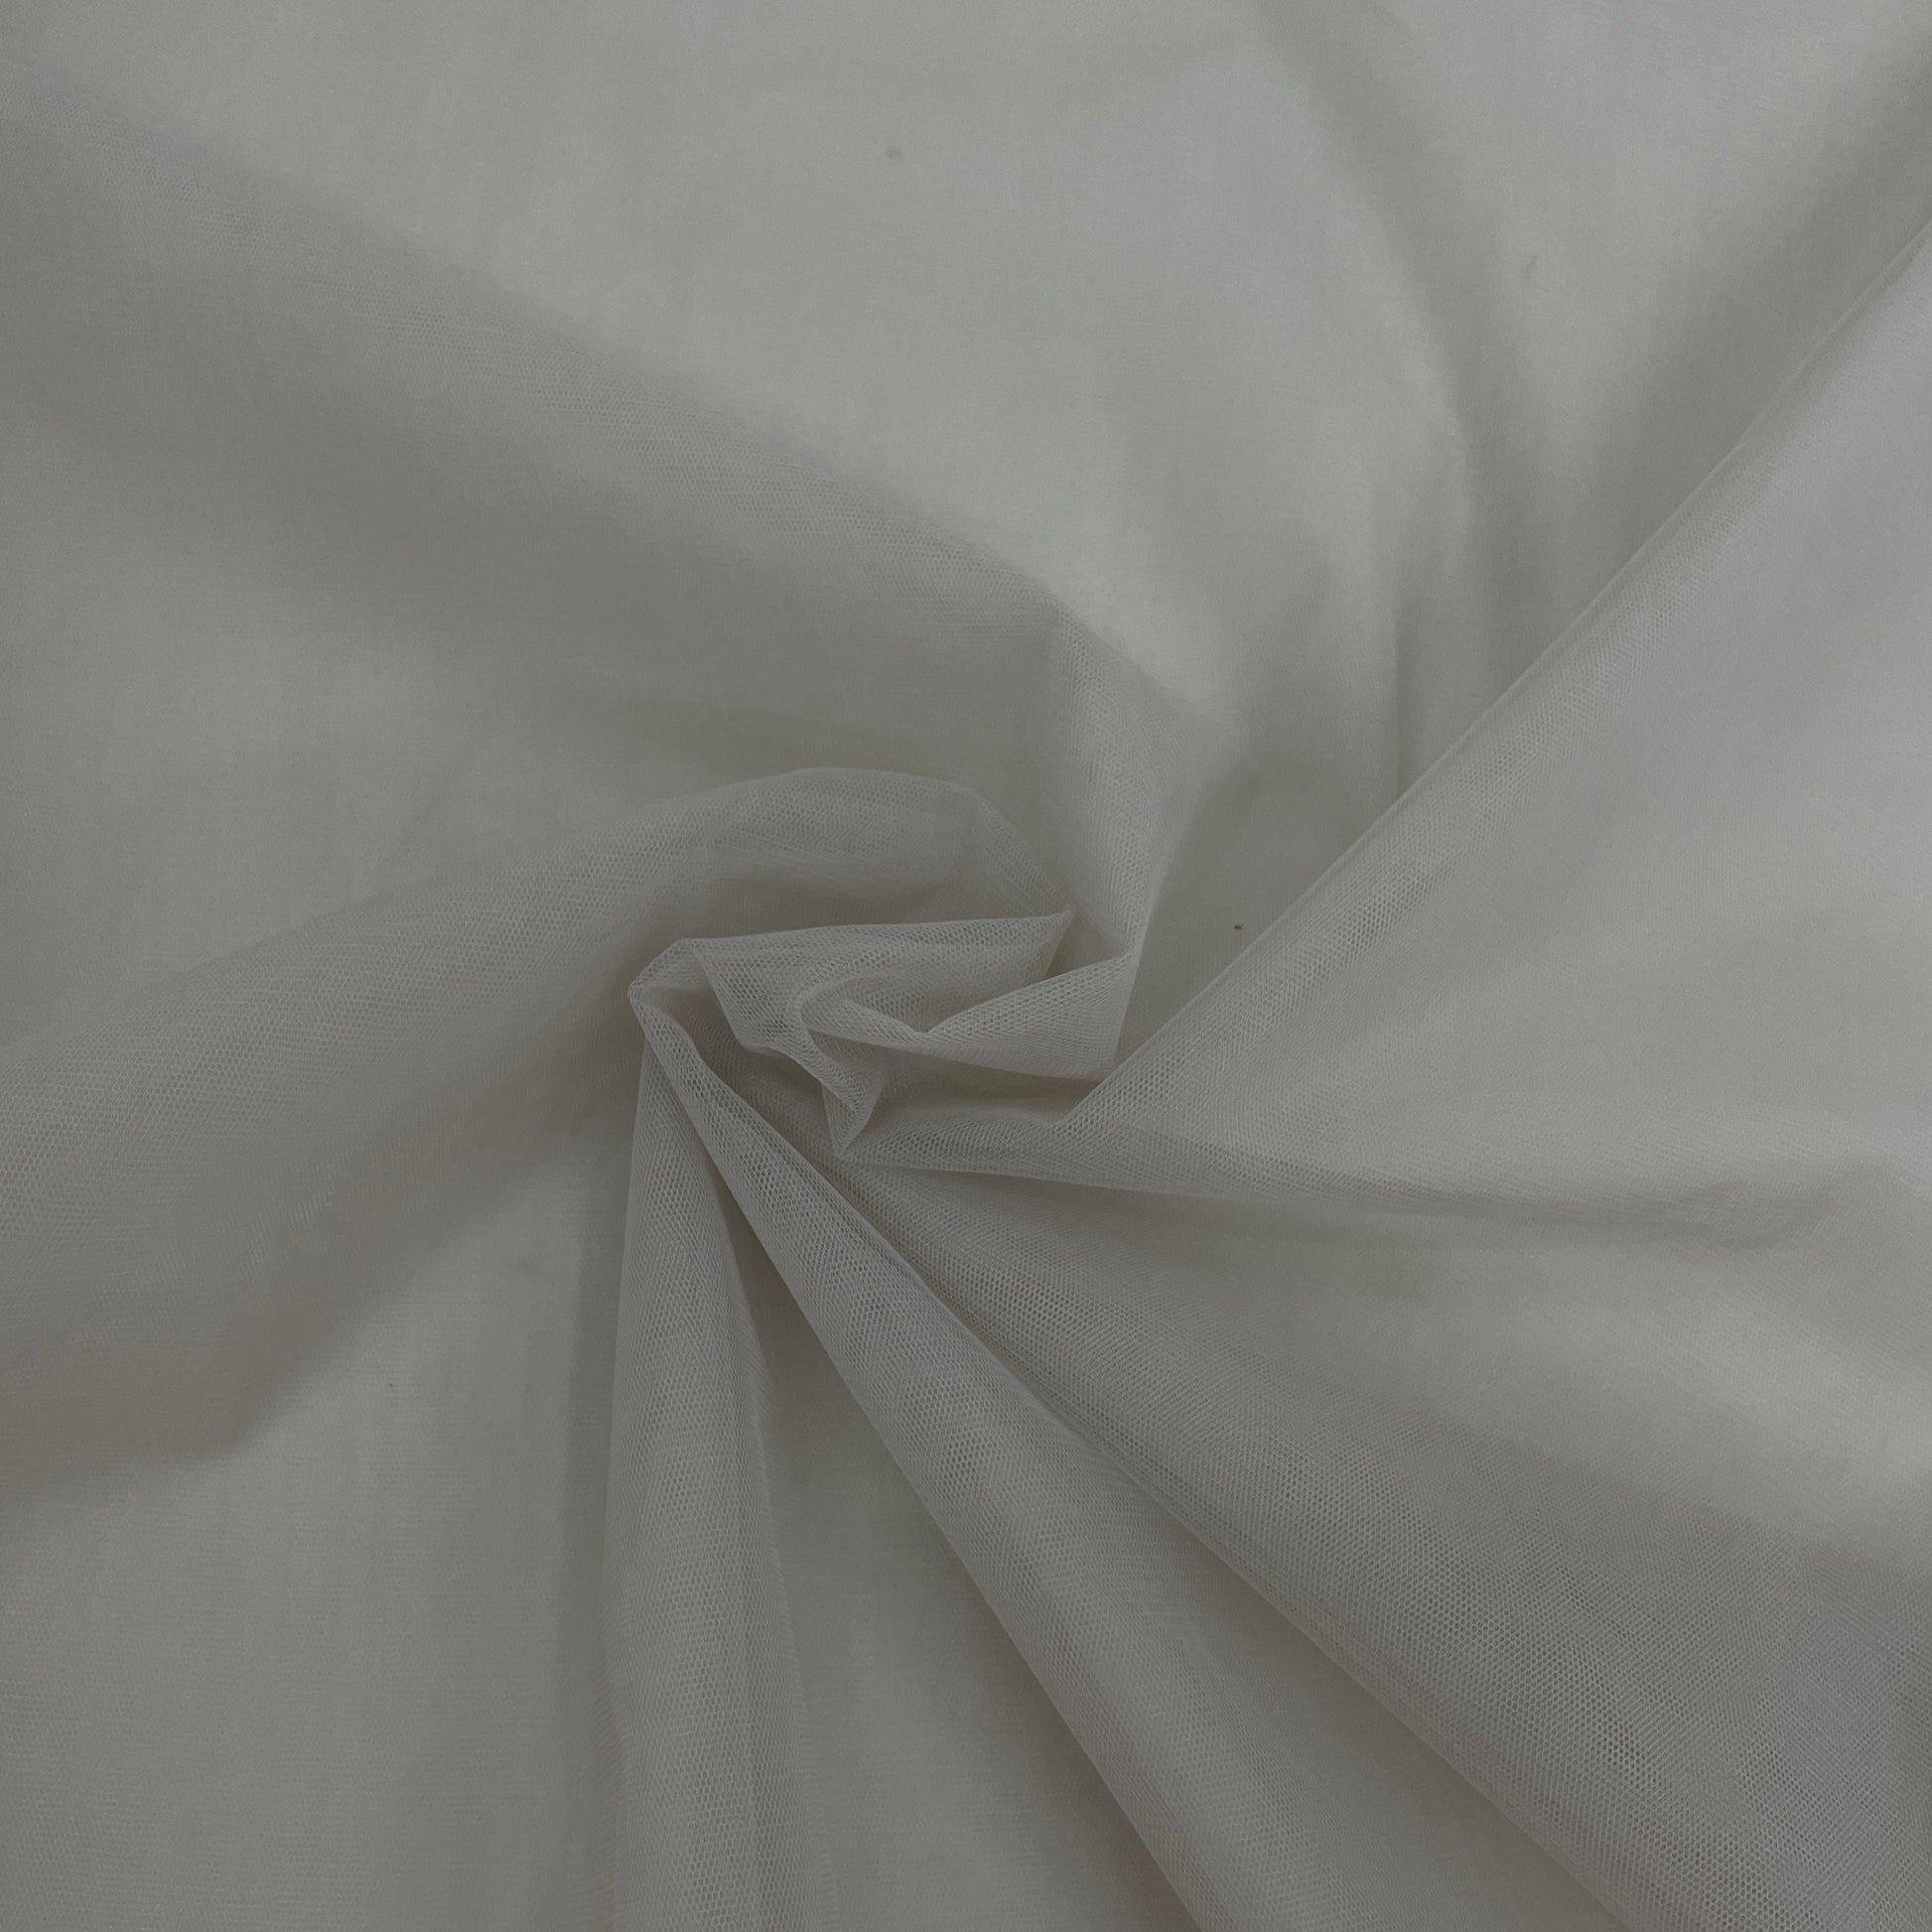 Stone Grey Solid Net Fabric - TradeUNO